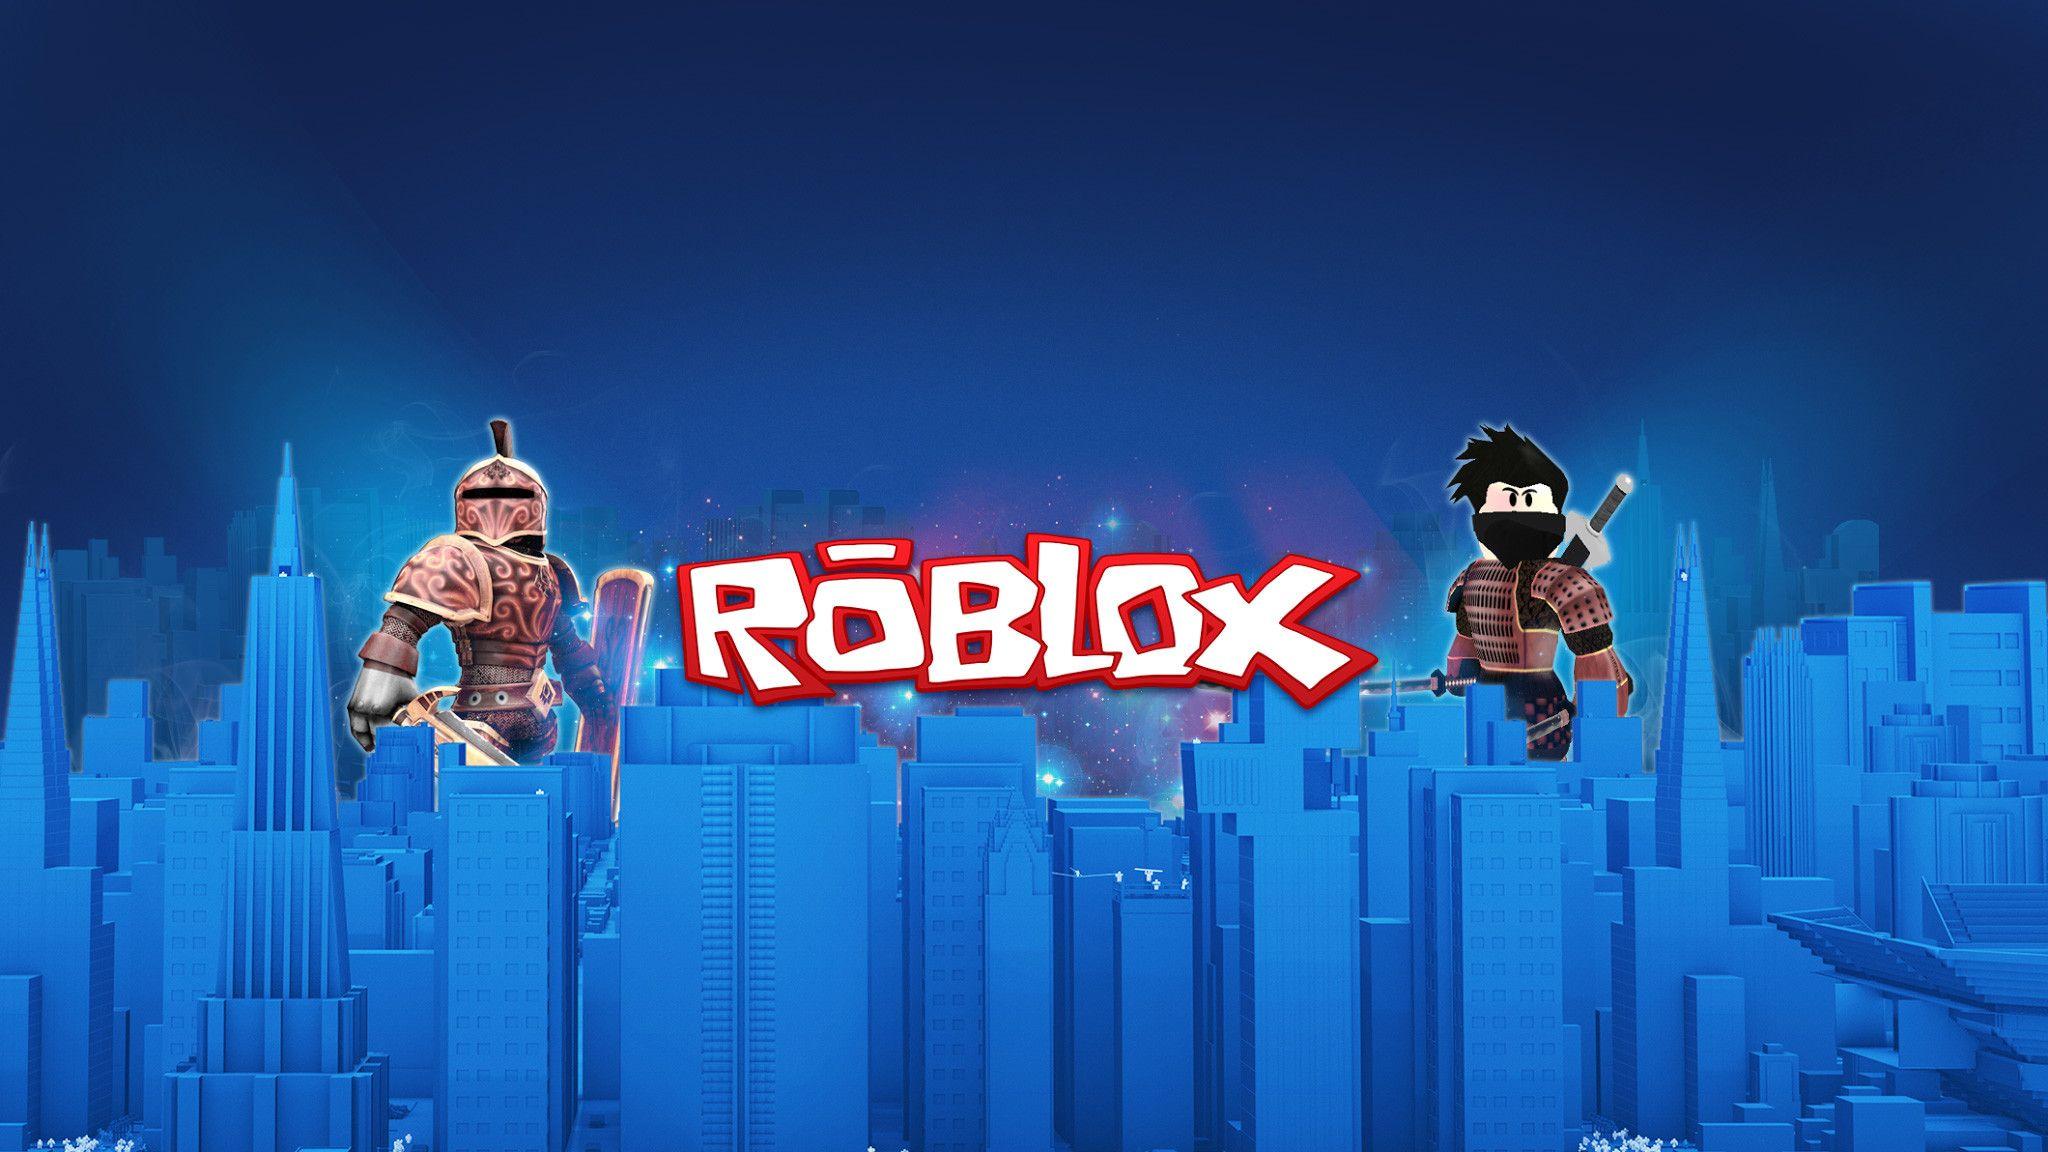 2048x1152 49 Make A ROBLOX Wallpaper, Top Ranked Make A ROBLOX